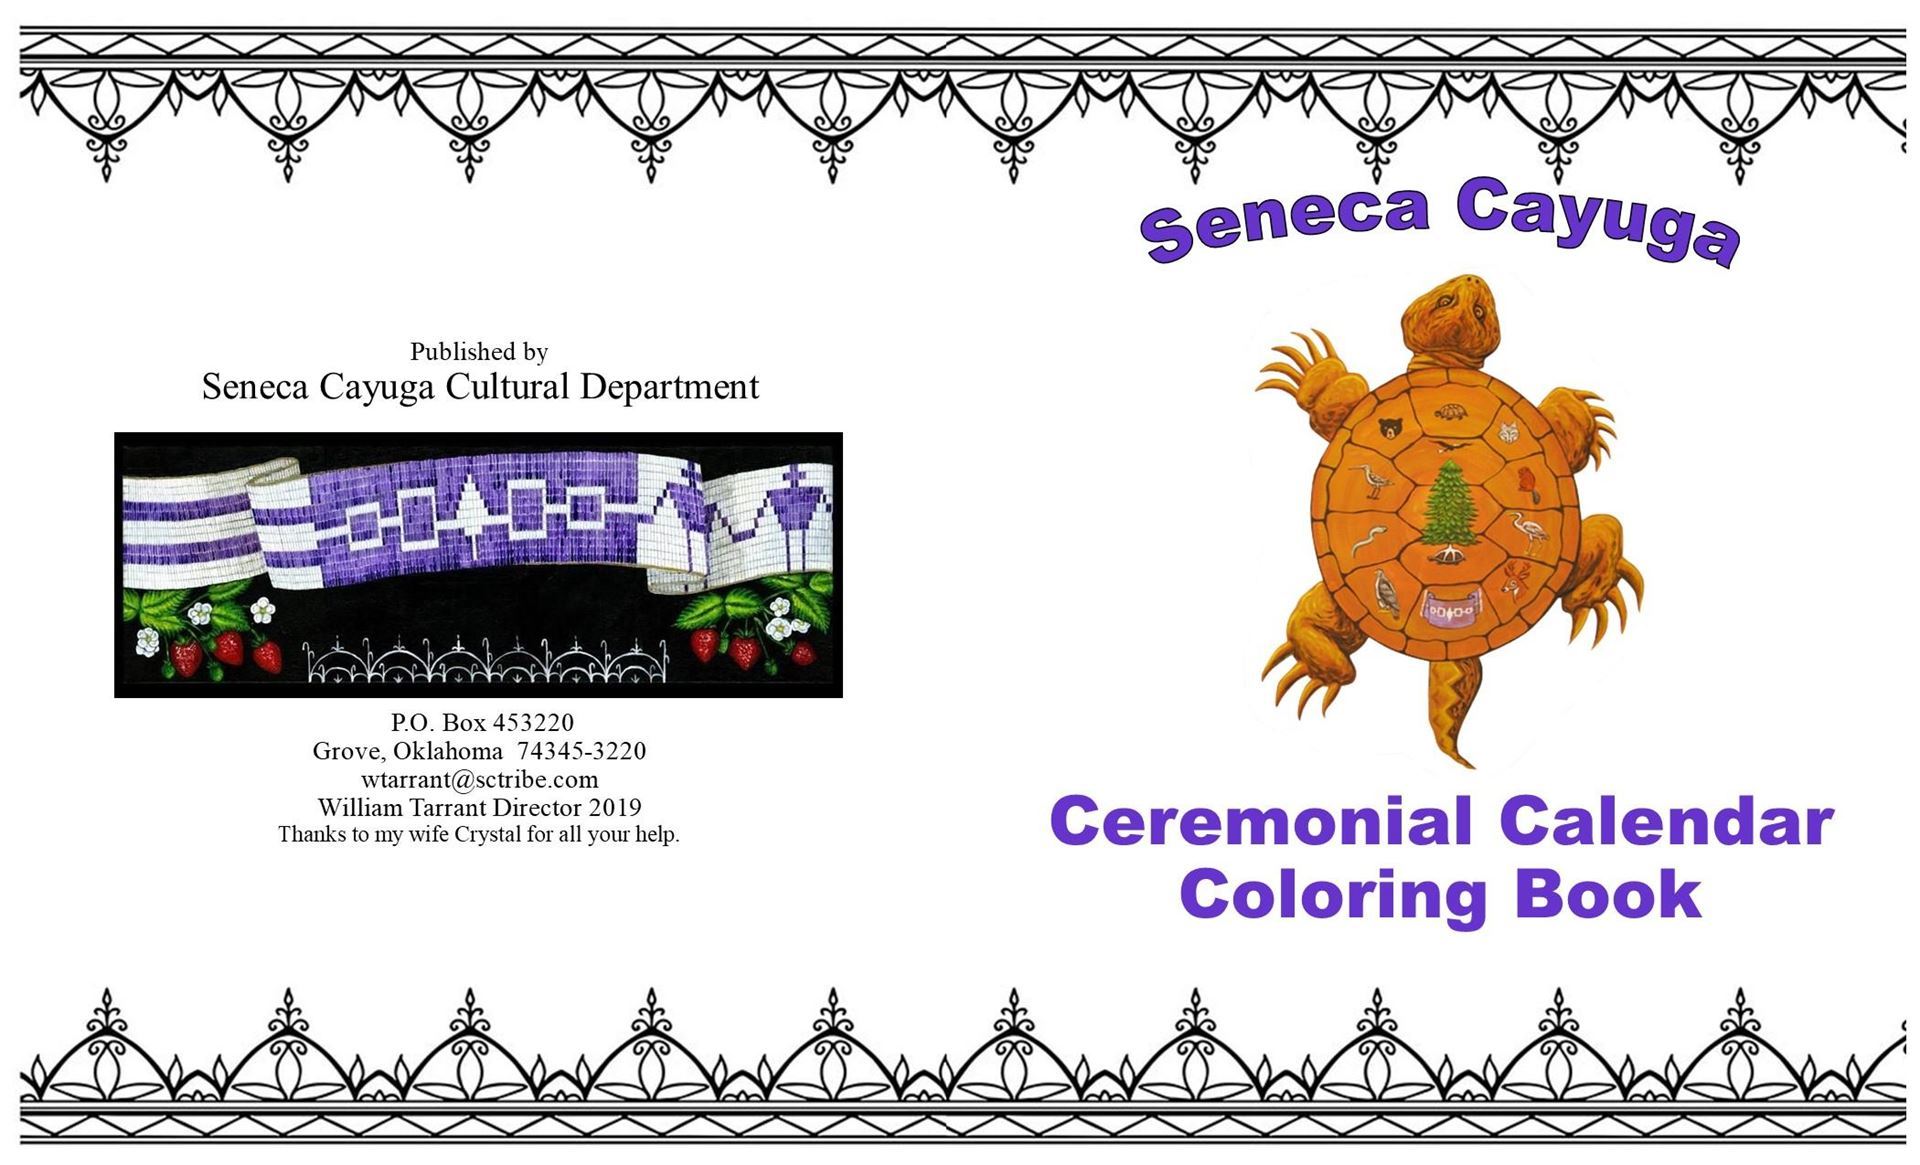 A link/image to download the Seneca Cayuga Ceremonial Calendar coloring book